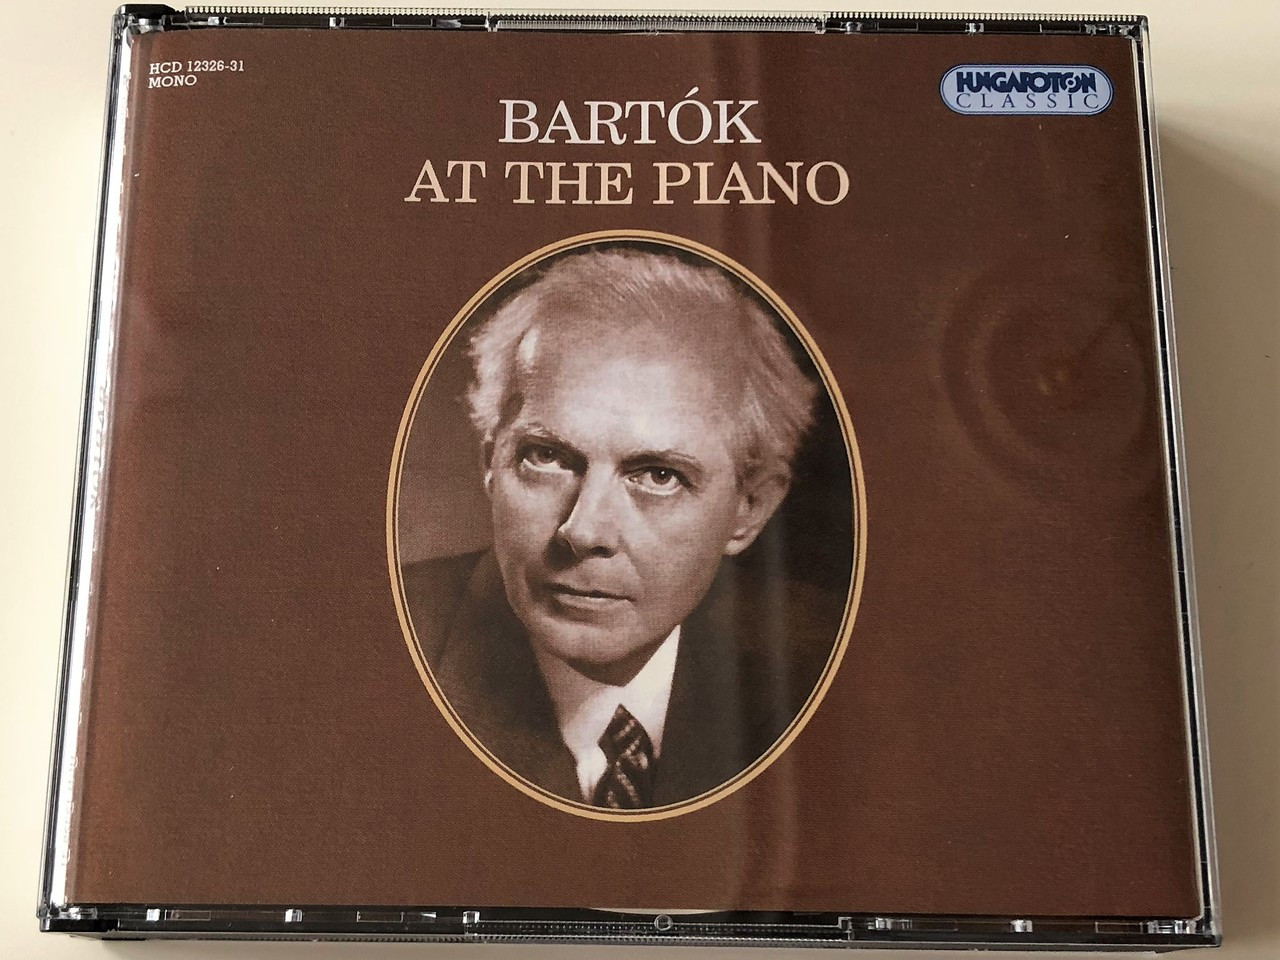 Bartók at the Piano CD / Béla Bartók Piano Programme Notes in English /  CDs: 6 / Tracks: 84 / Length: 6:24:13 / HCD12326-31 Hungaroton -  bibleinmylanguage